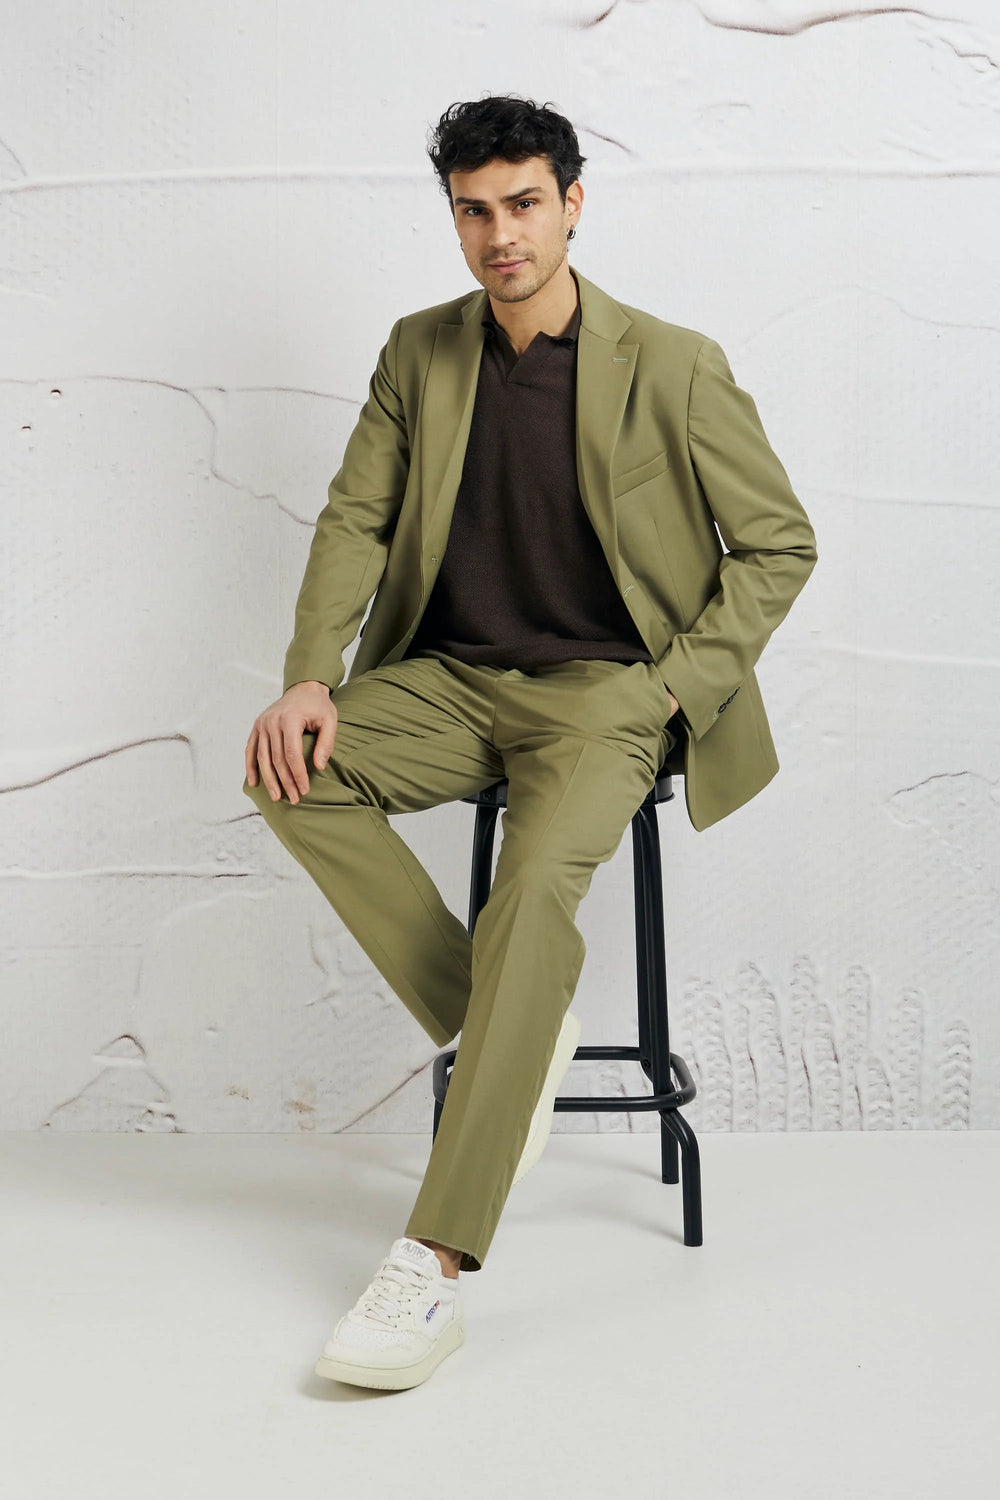 Elegant Sportswear for Men: A New Definition of Style